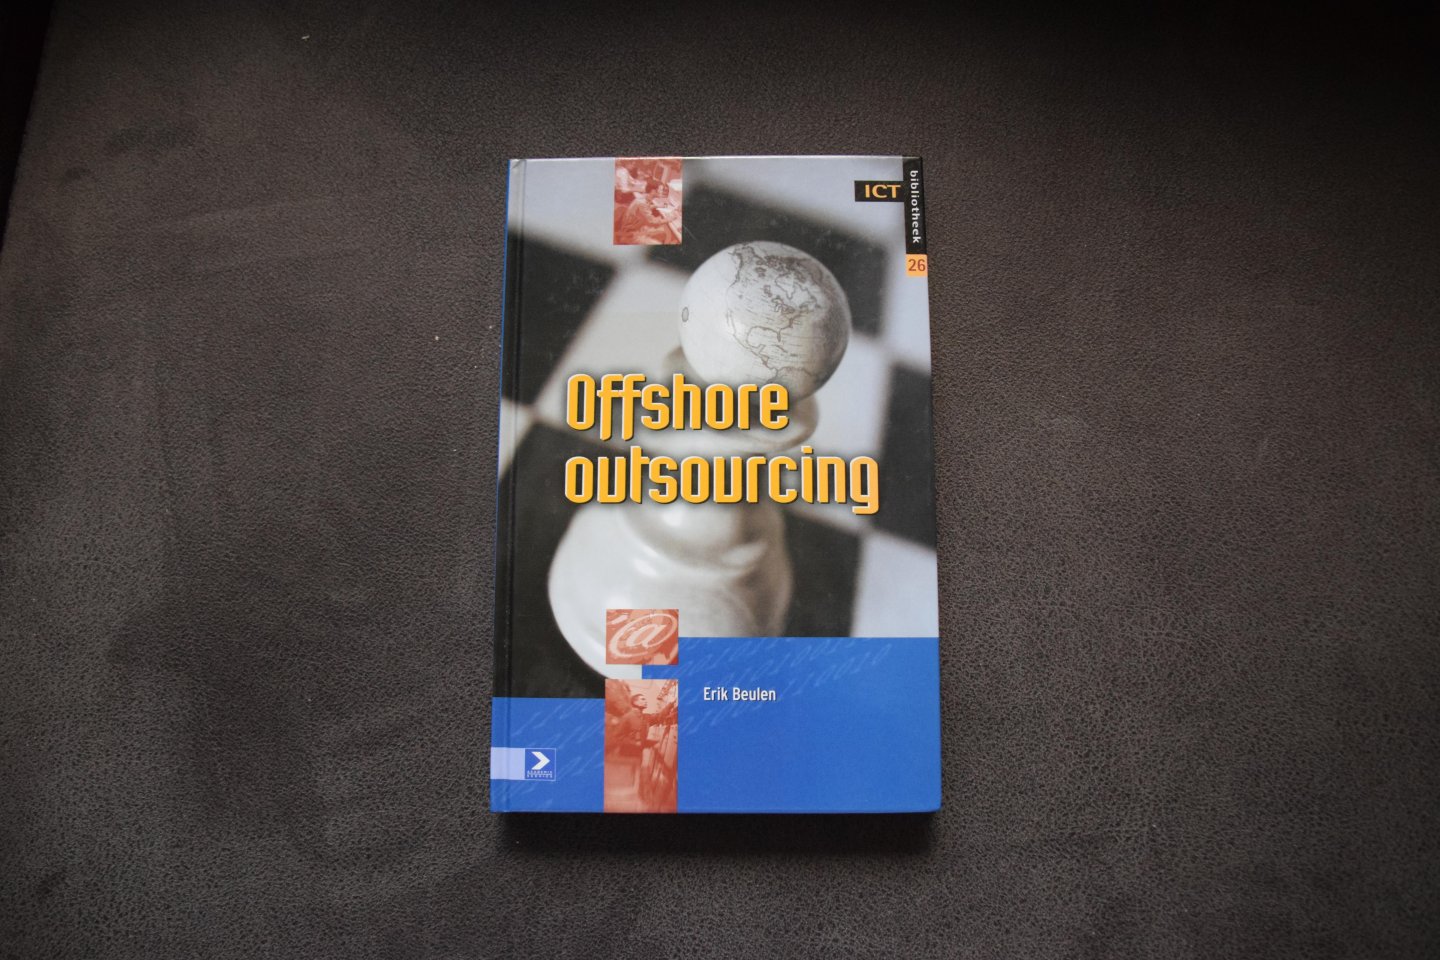 Beulen, E.J.J. - Offshore outsourcing